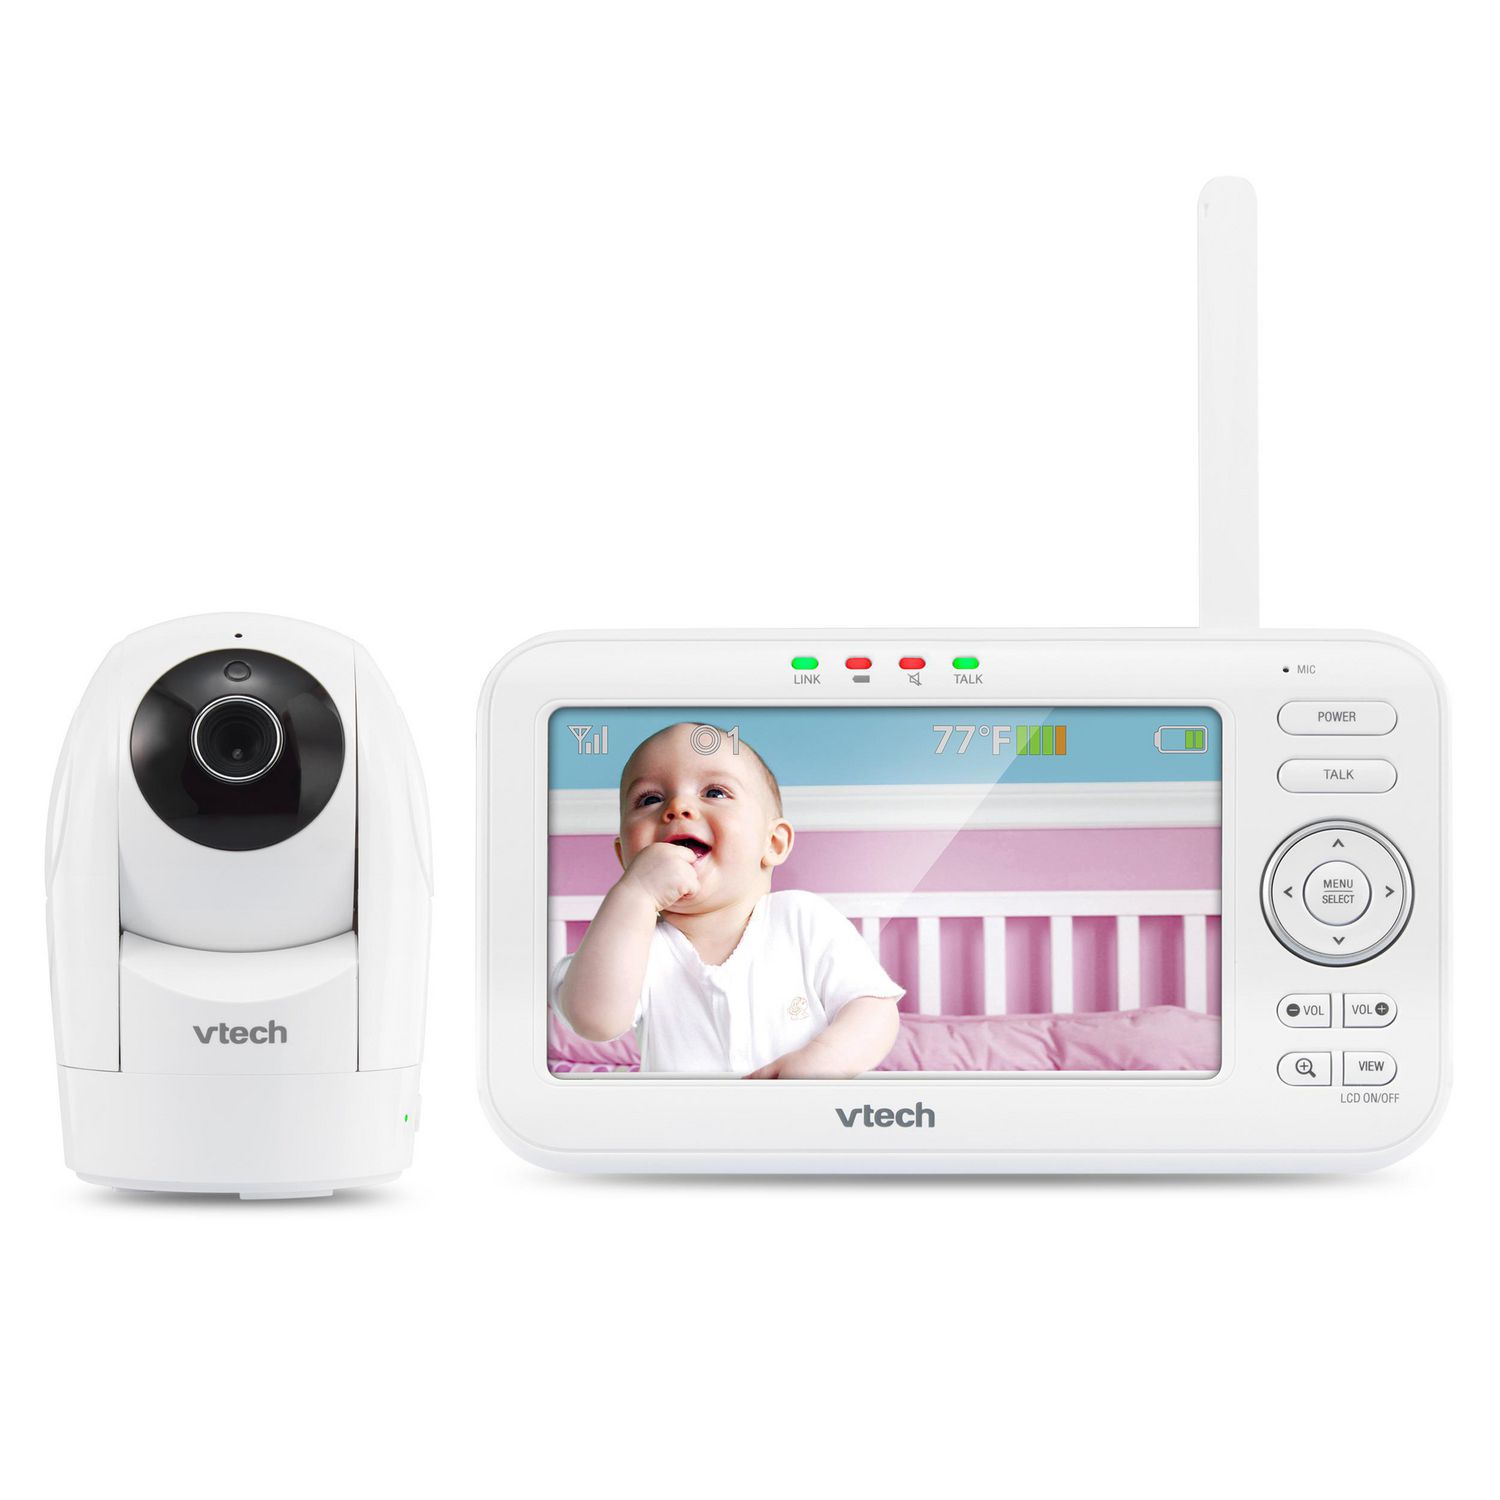 VTech VM5262 5” Digital Video Baby Monitor with Pan & Tilt